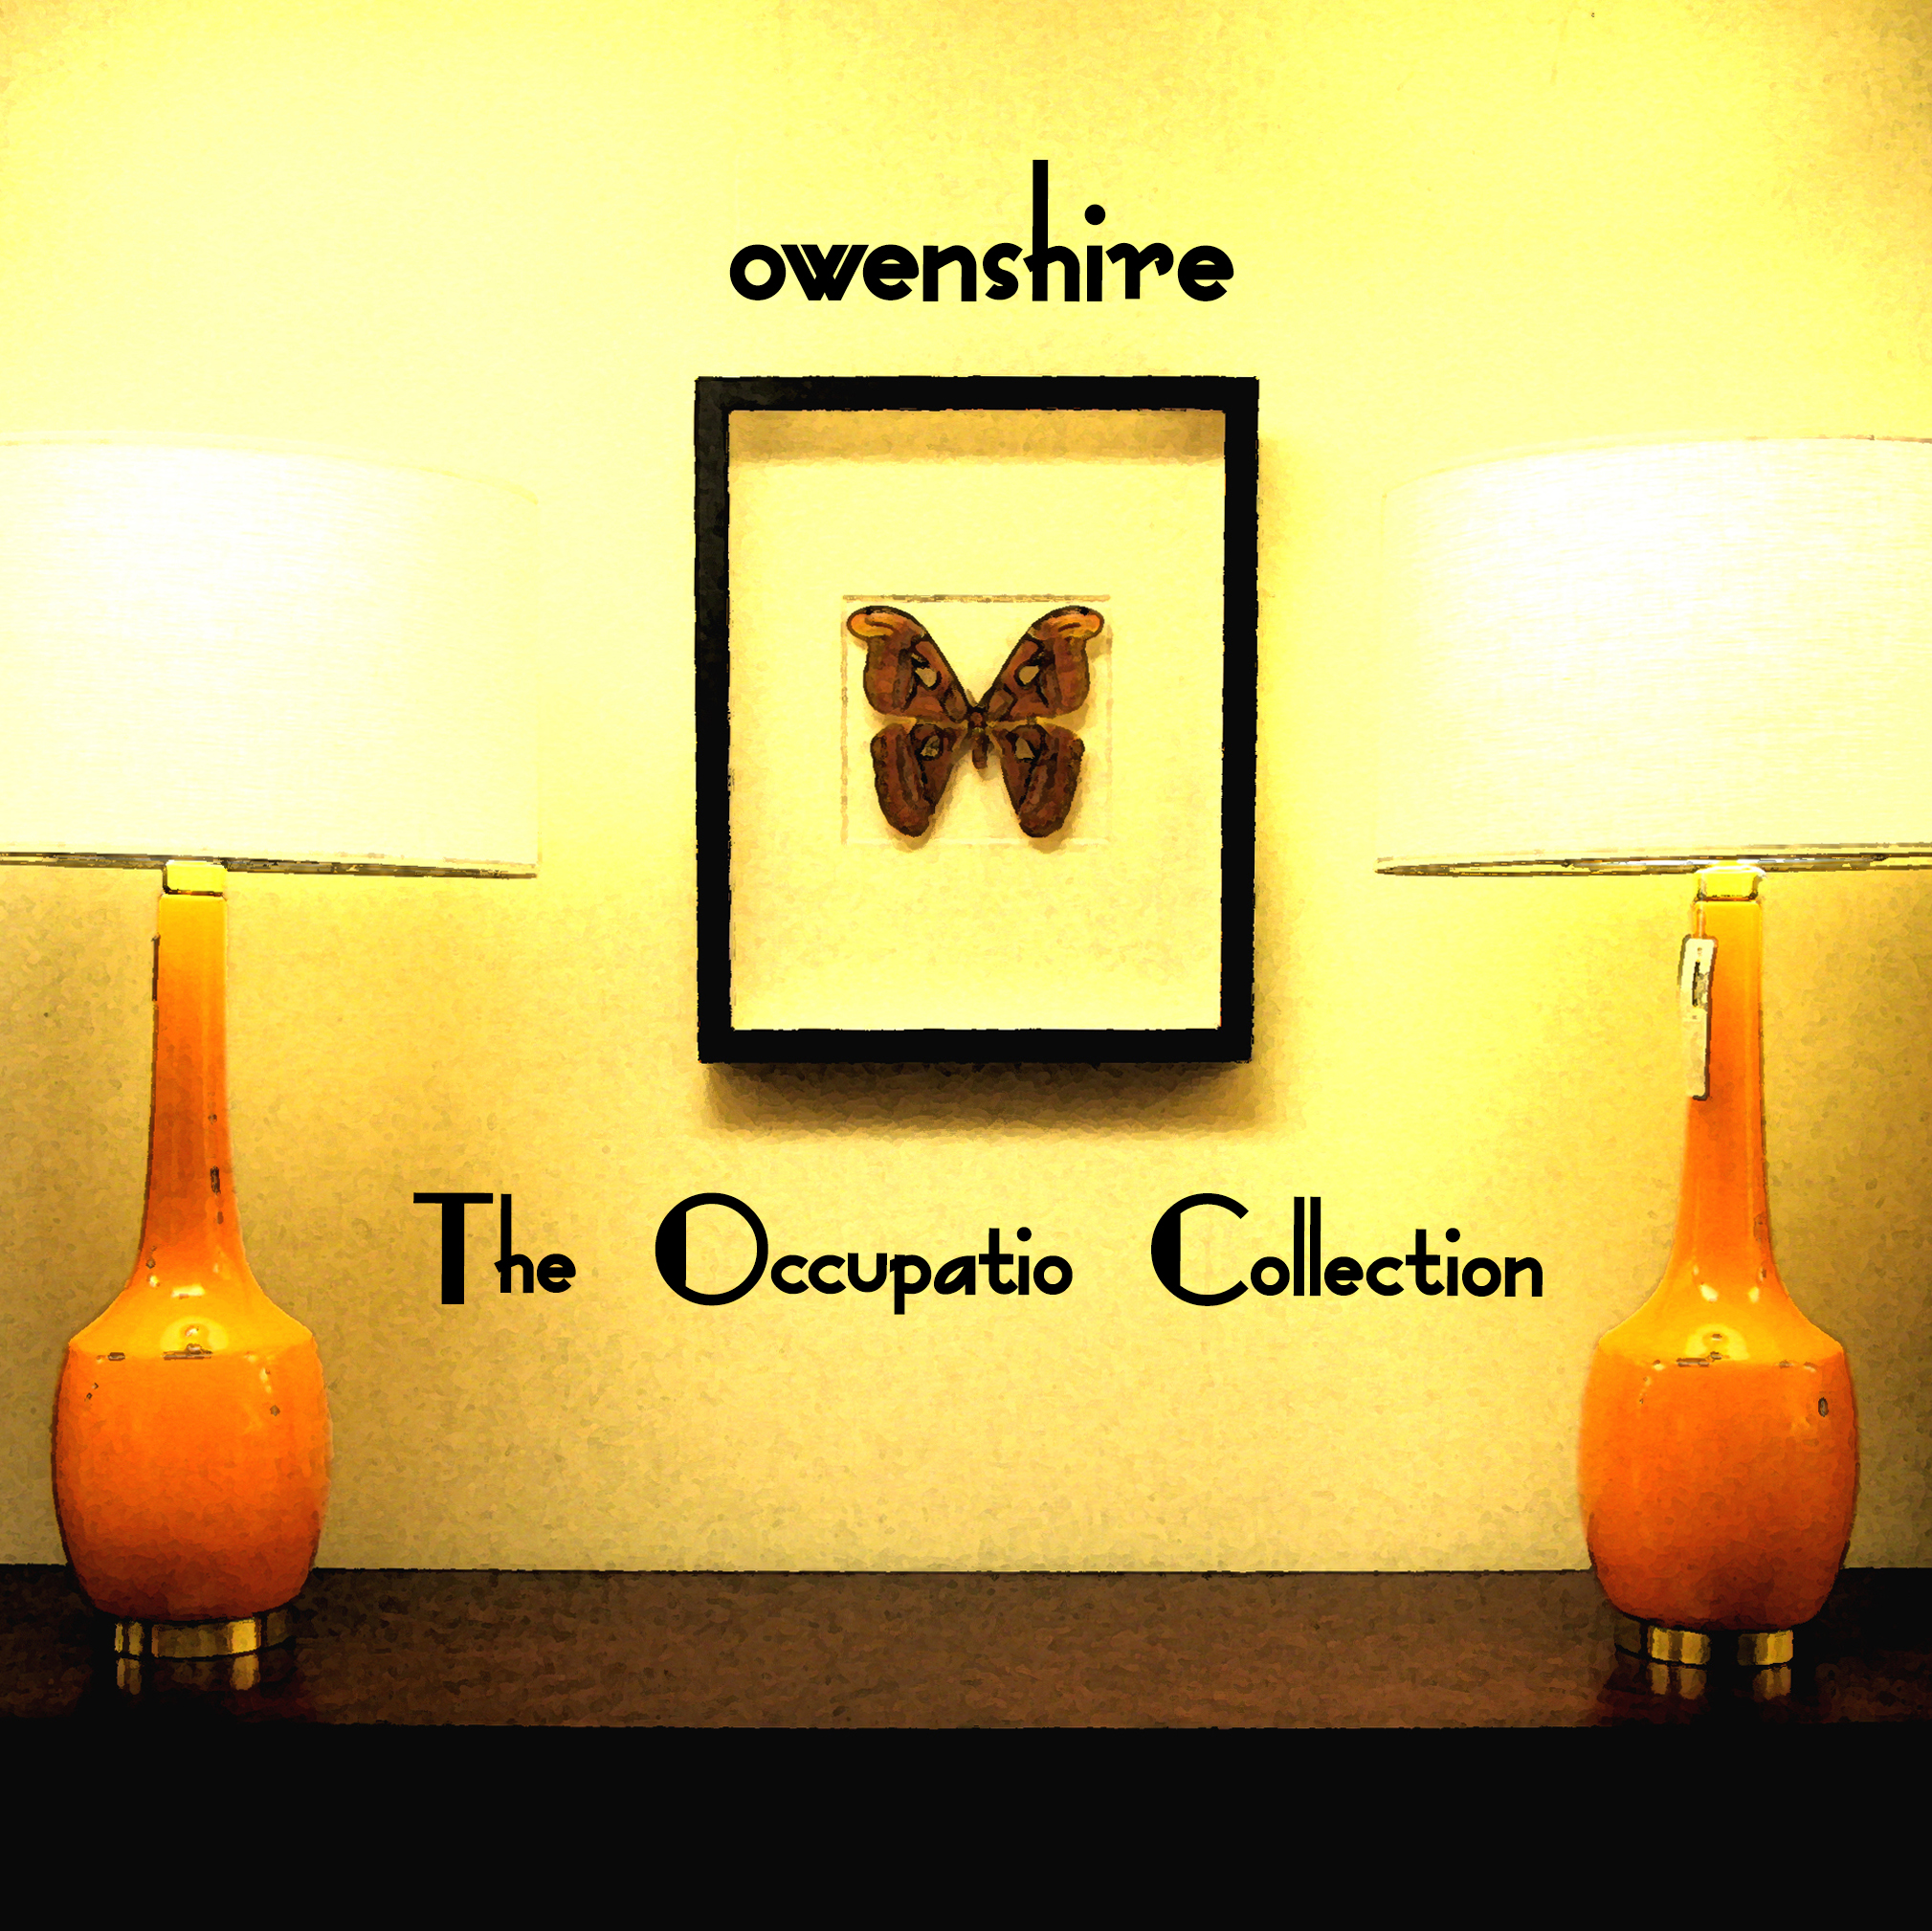 Owenshire The Occupatio Collection Album Cover Robert Muhlbock